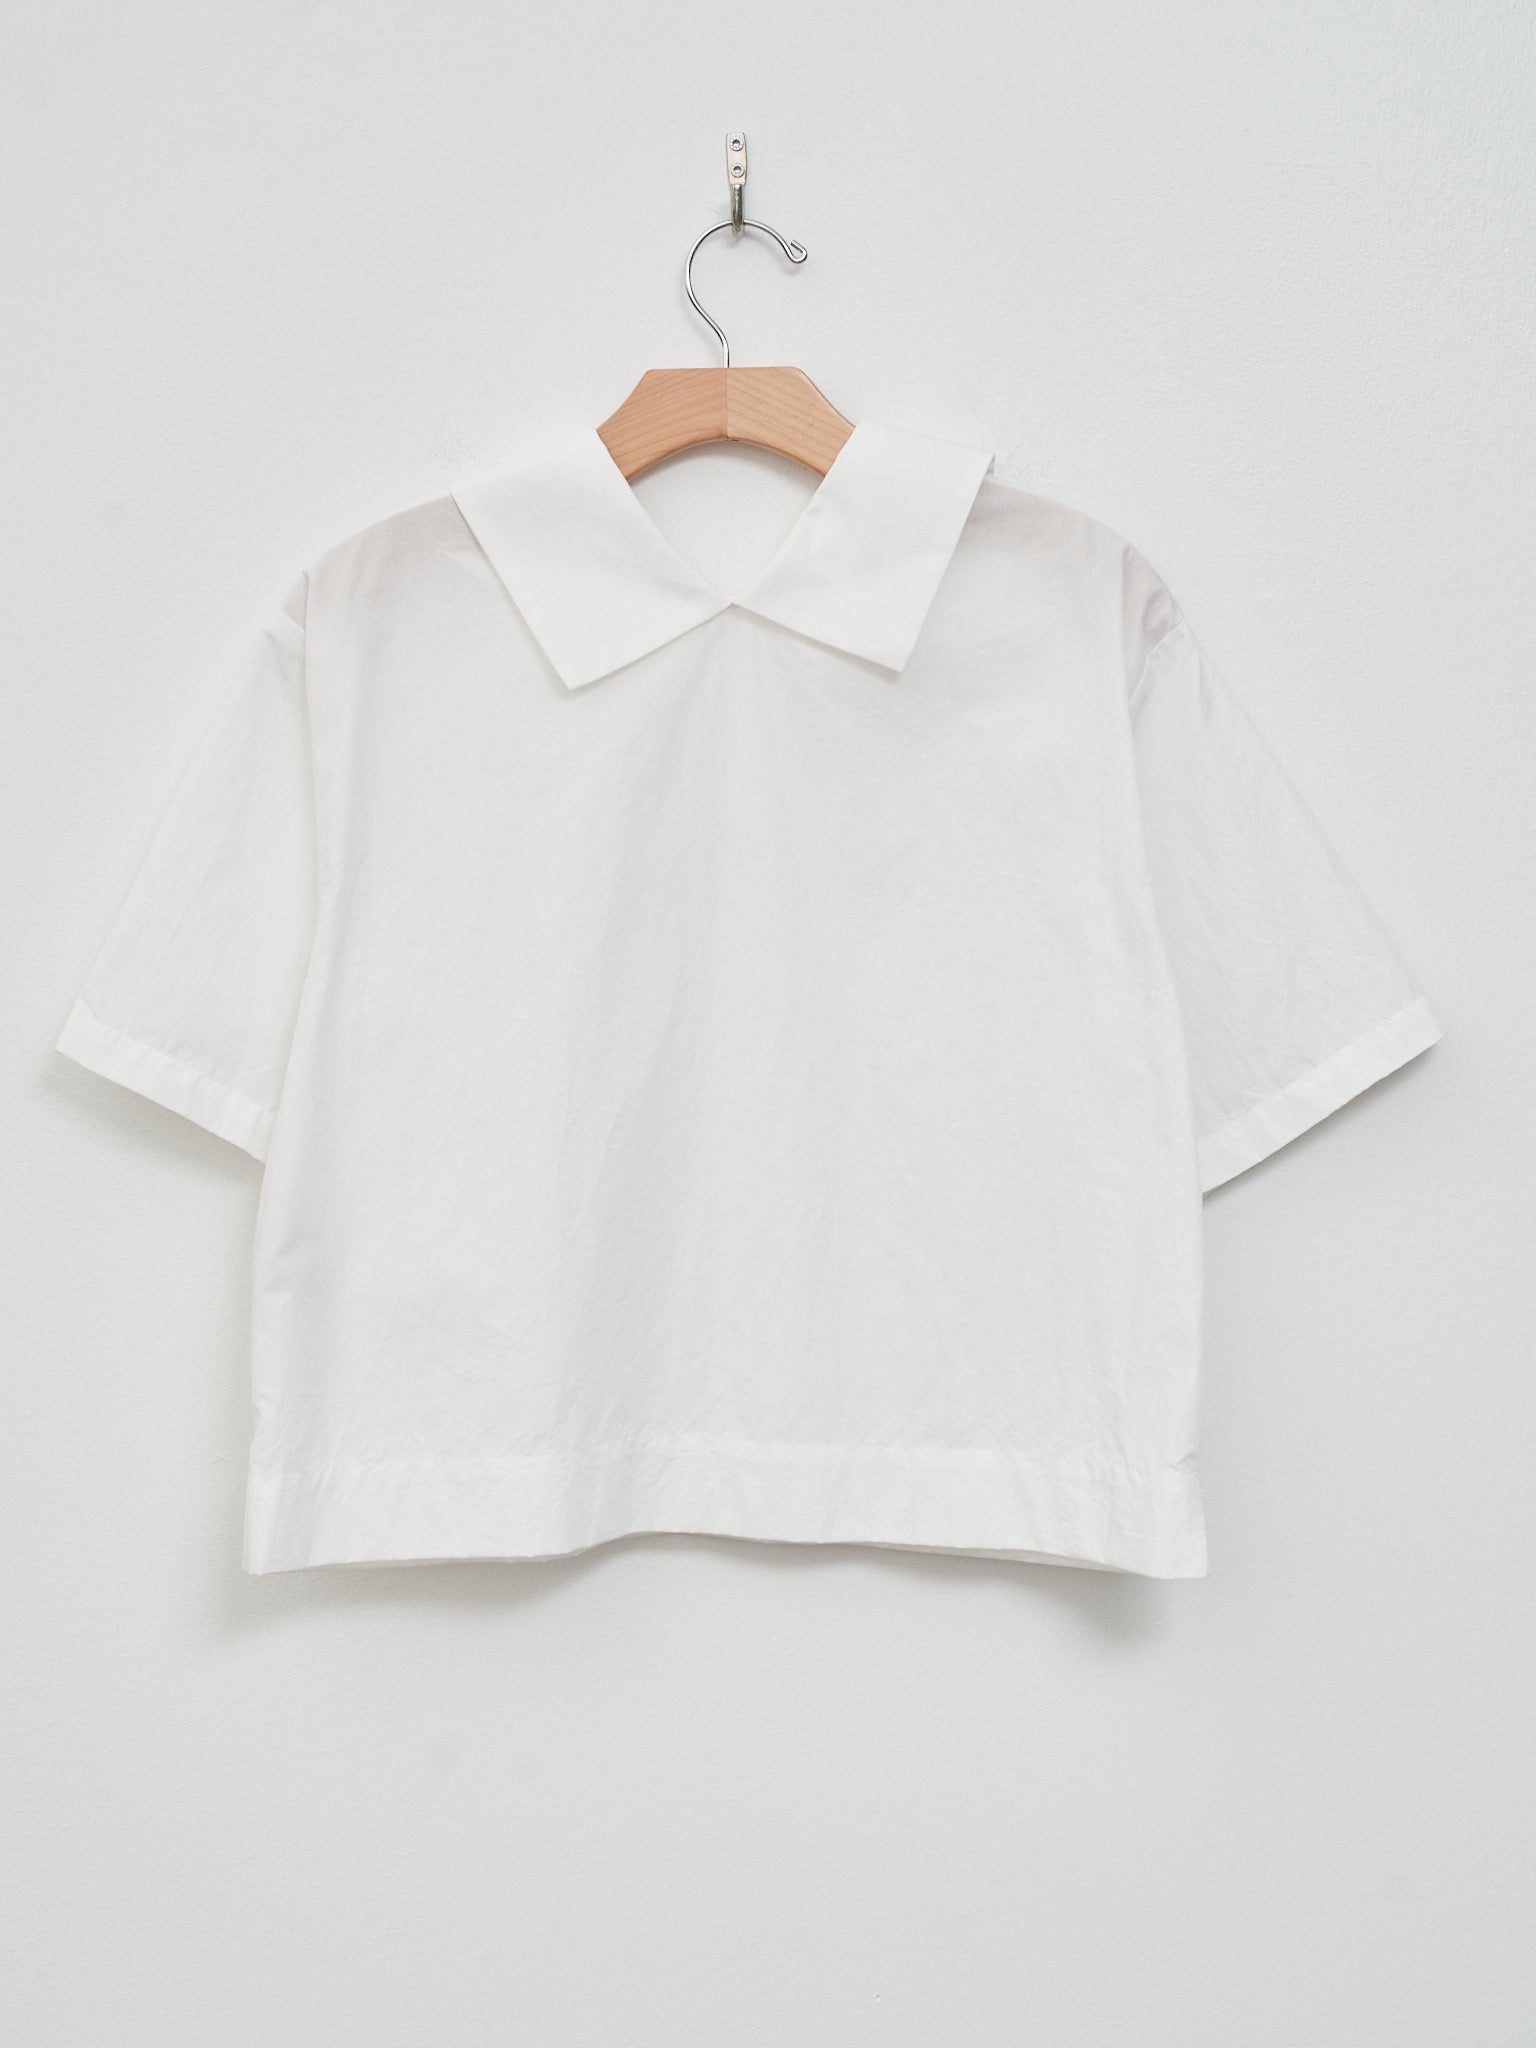 Namu Shop - Nicholson & Nicholson Twin Shirt - White